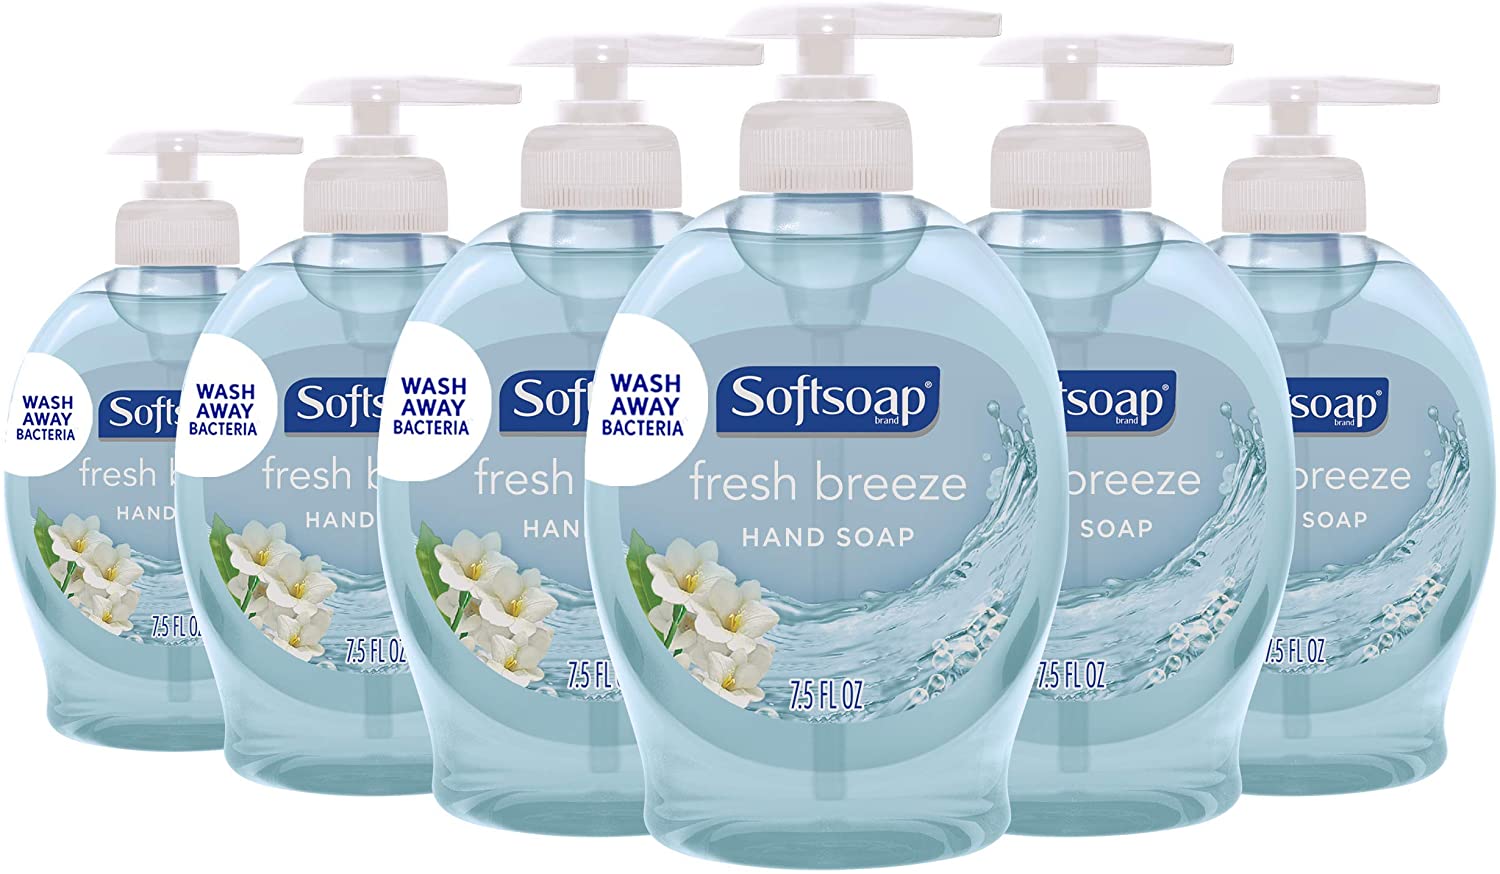 Softsoap Liquid Hand Soap, Fresh Breeze - 7.5 Fluid Ounce (Pack of 6) $5.88